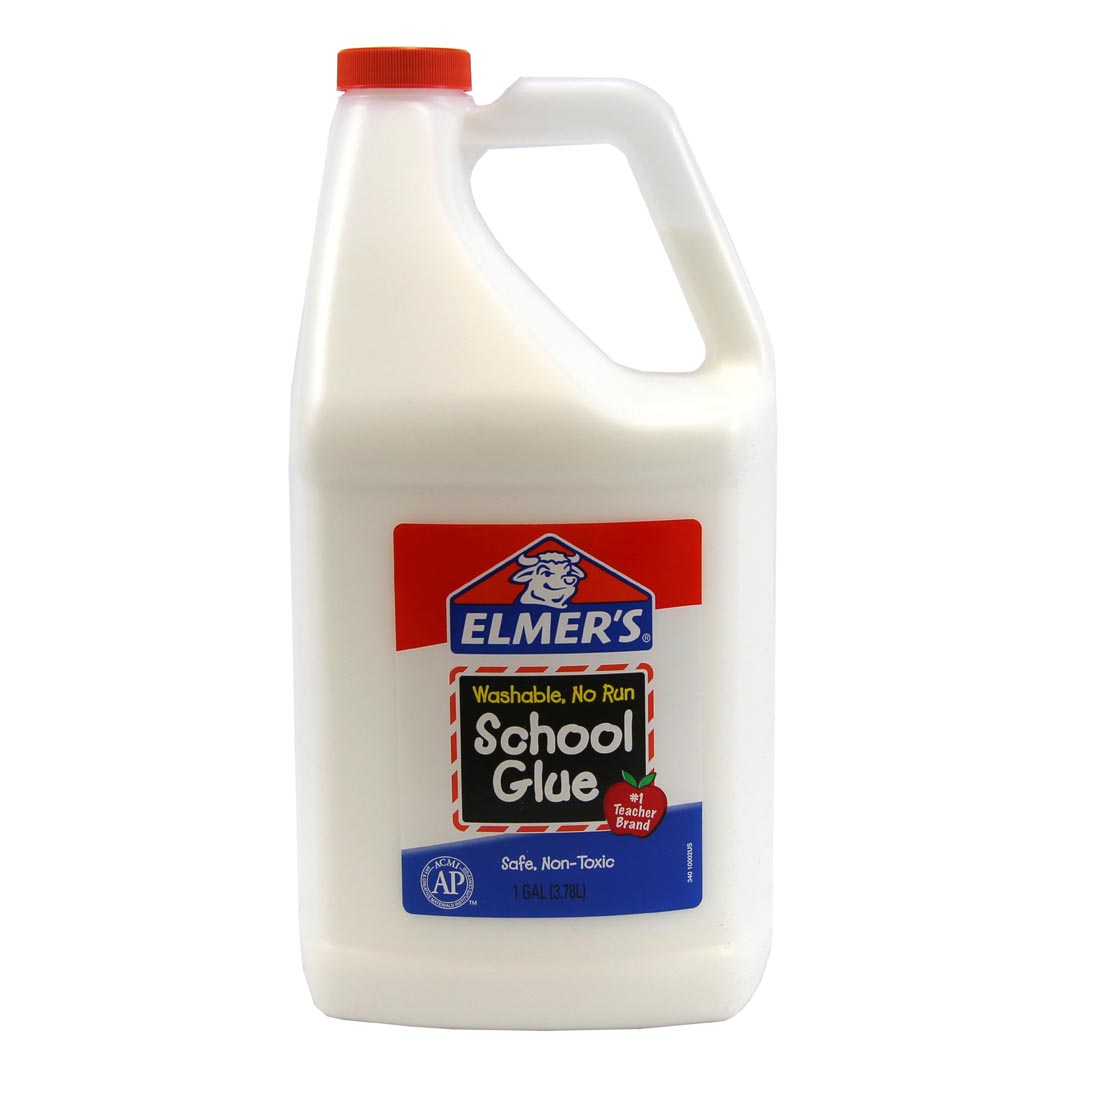 Gallon of Elmer's Washable School Glue